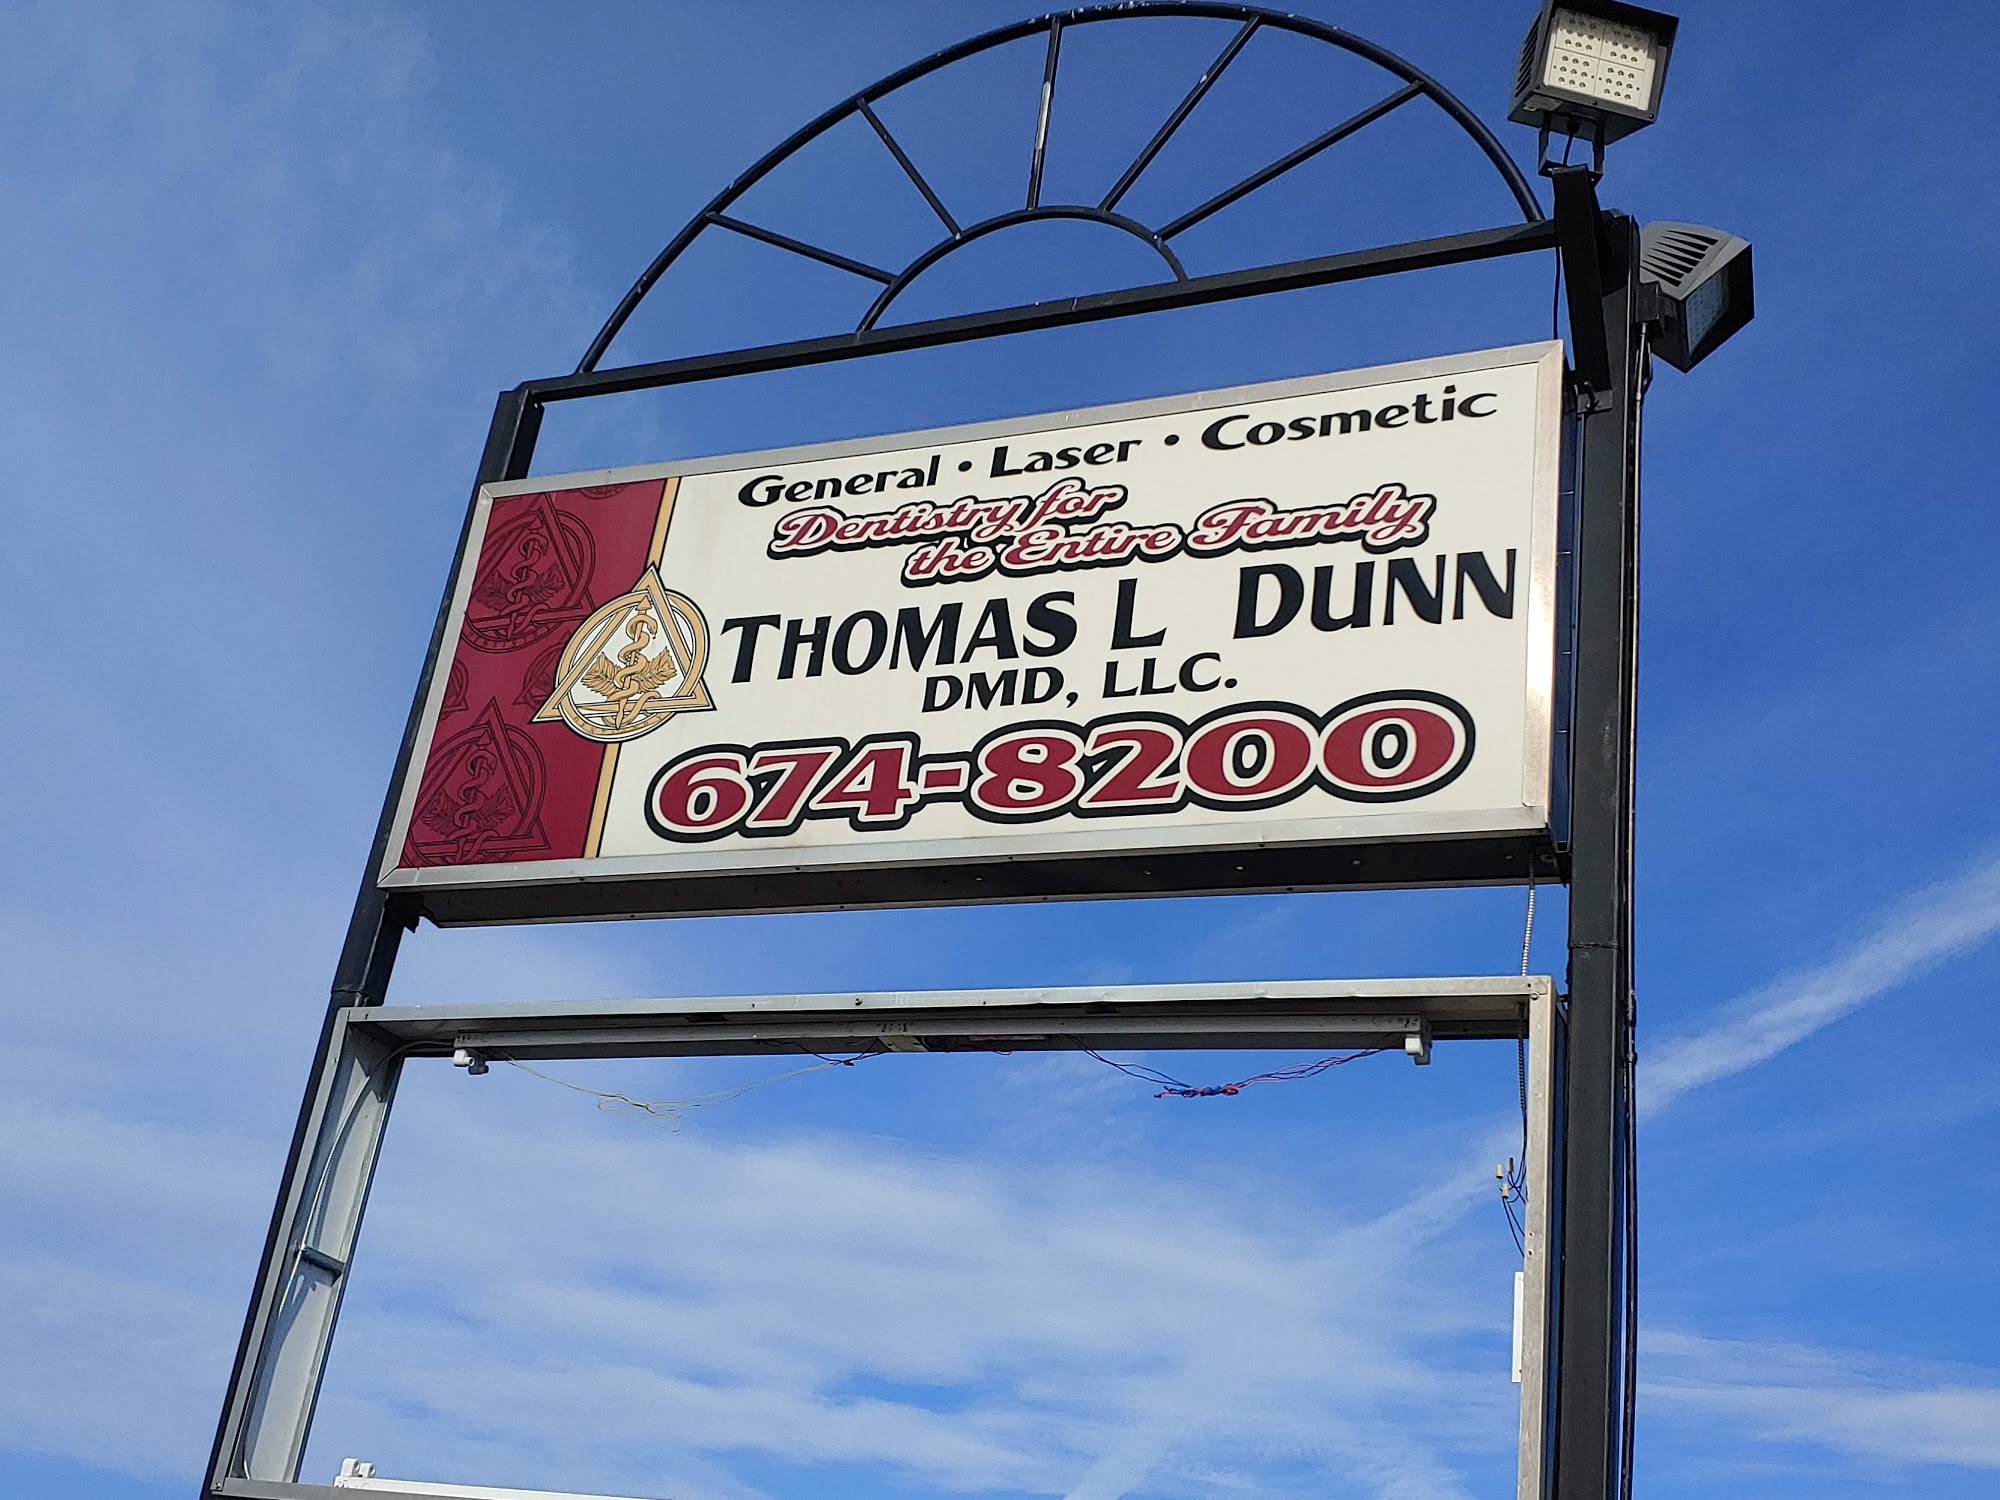 Dr. Thomas L. Dunn, DMD